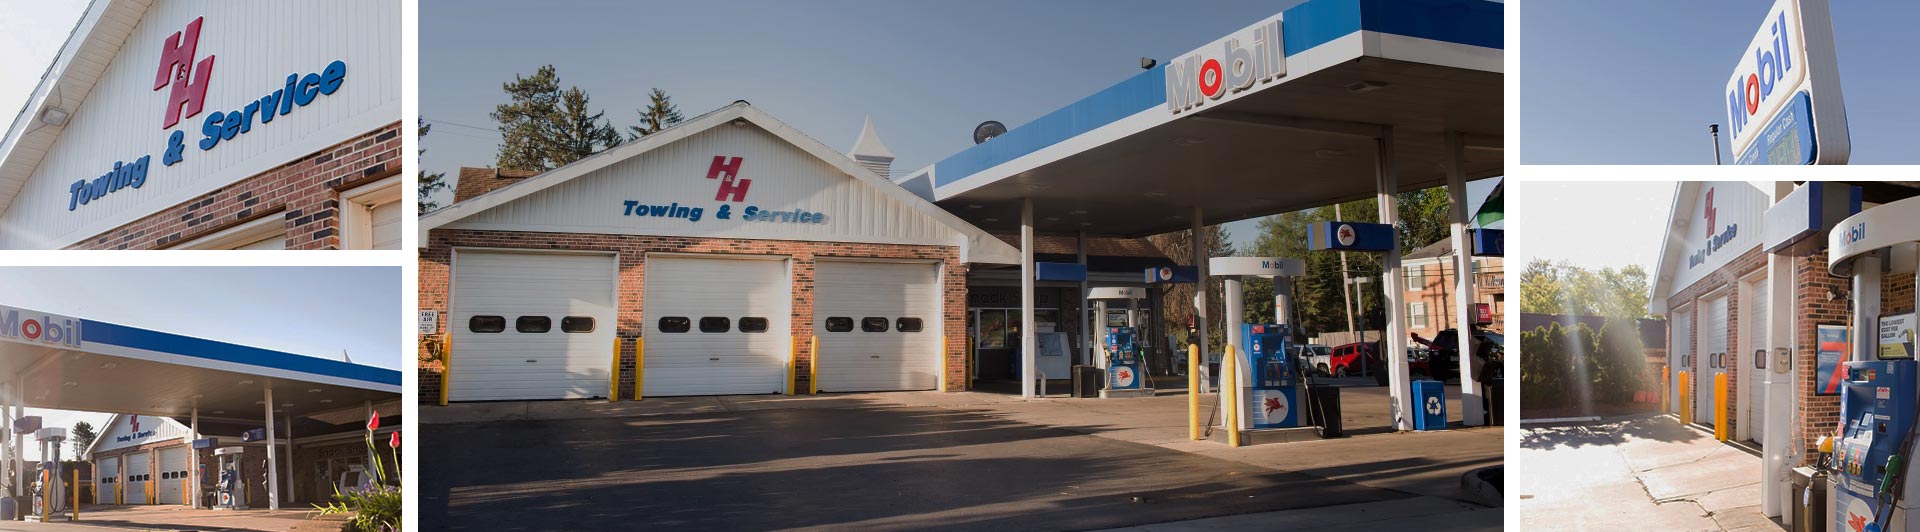 H&H Mobil Fuels, Towing & Service